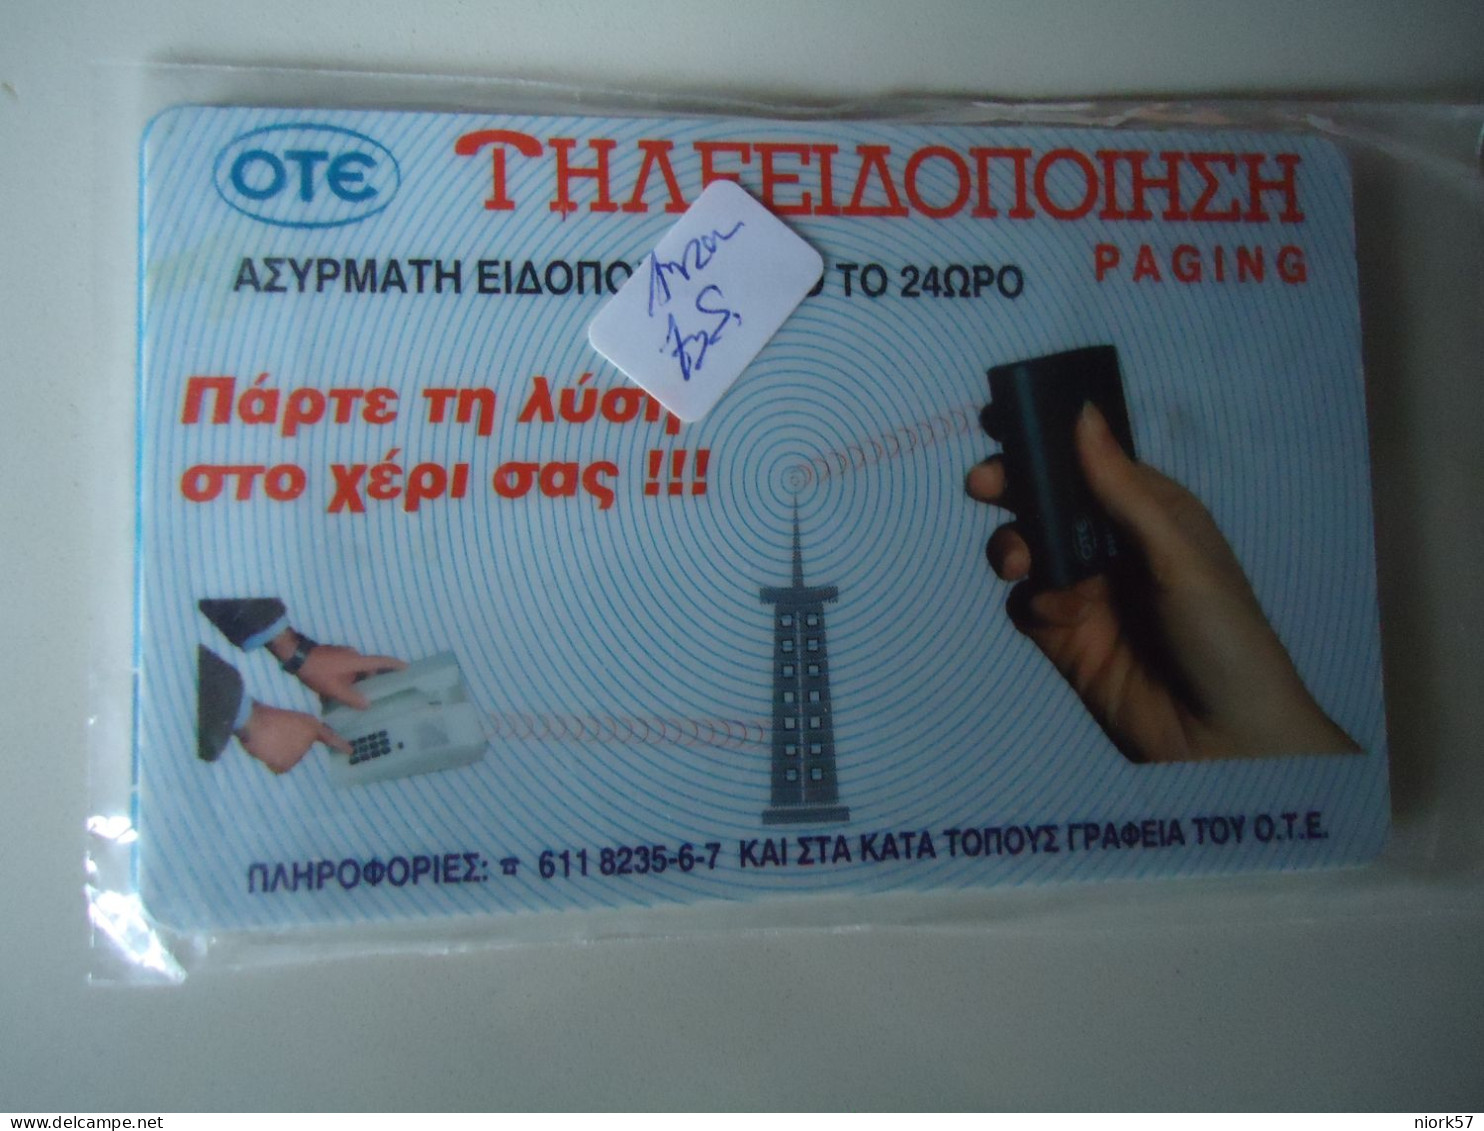 GREECE  USED CARDS 1994 O119   XORIS GRAMMH WITHOUT LINE - Telekom-Betreiber